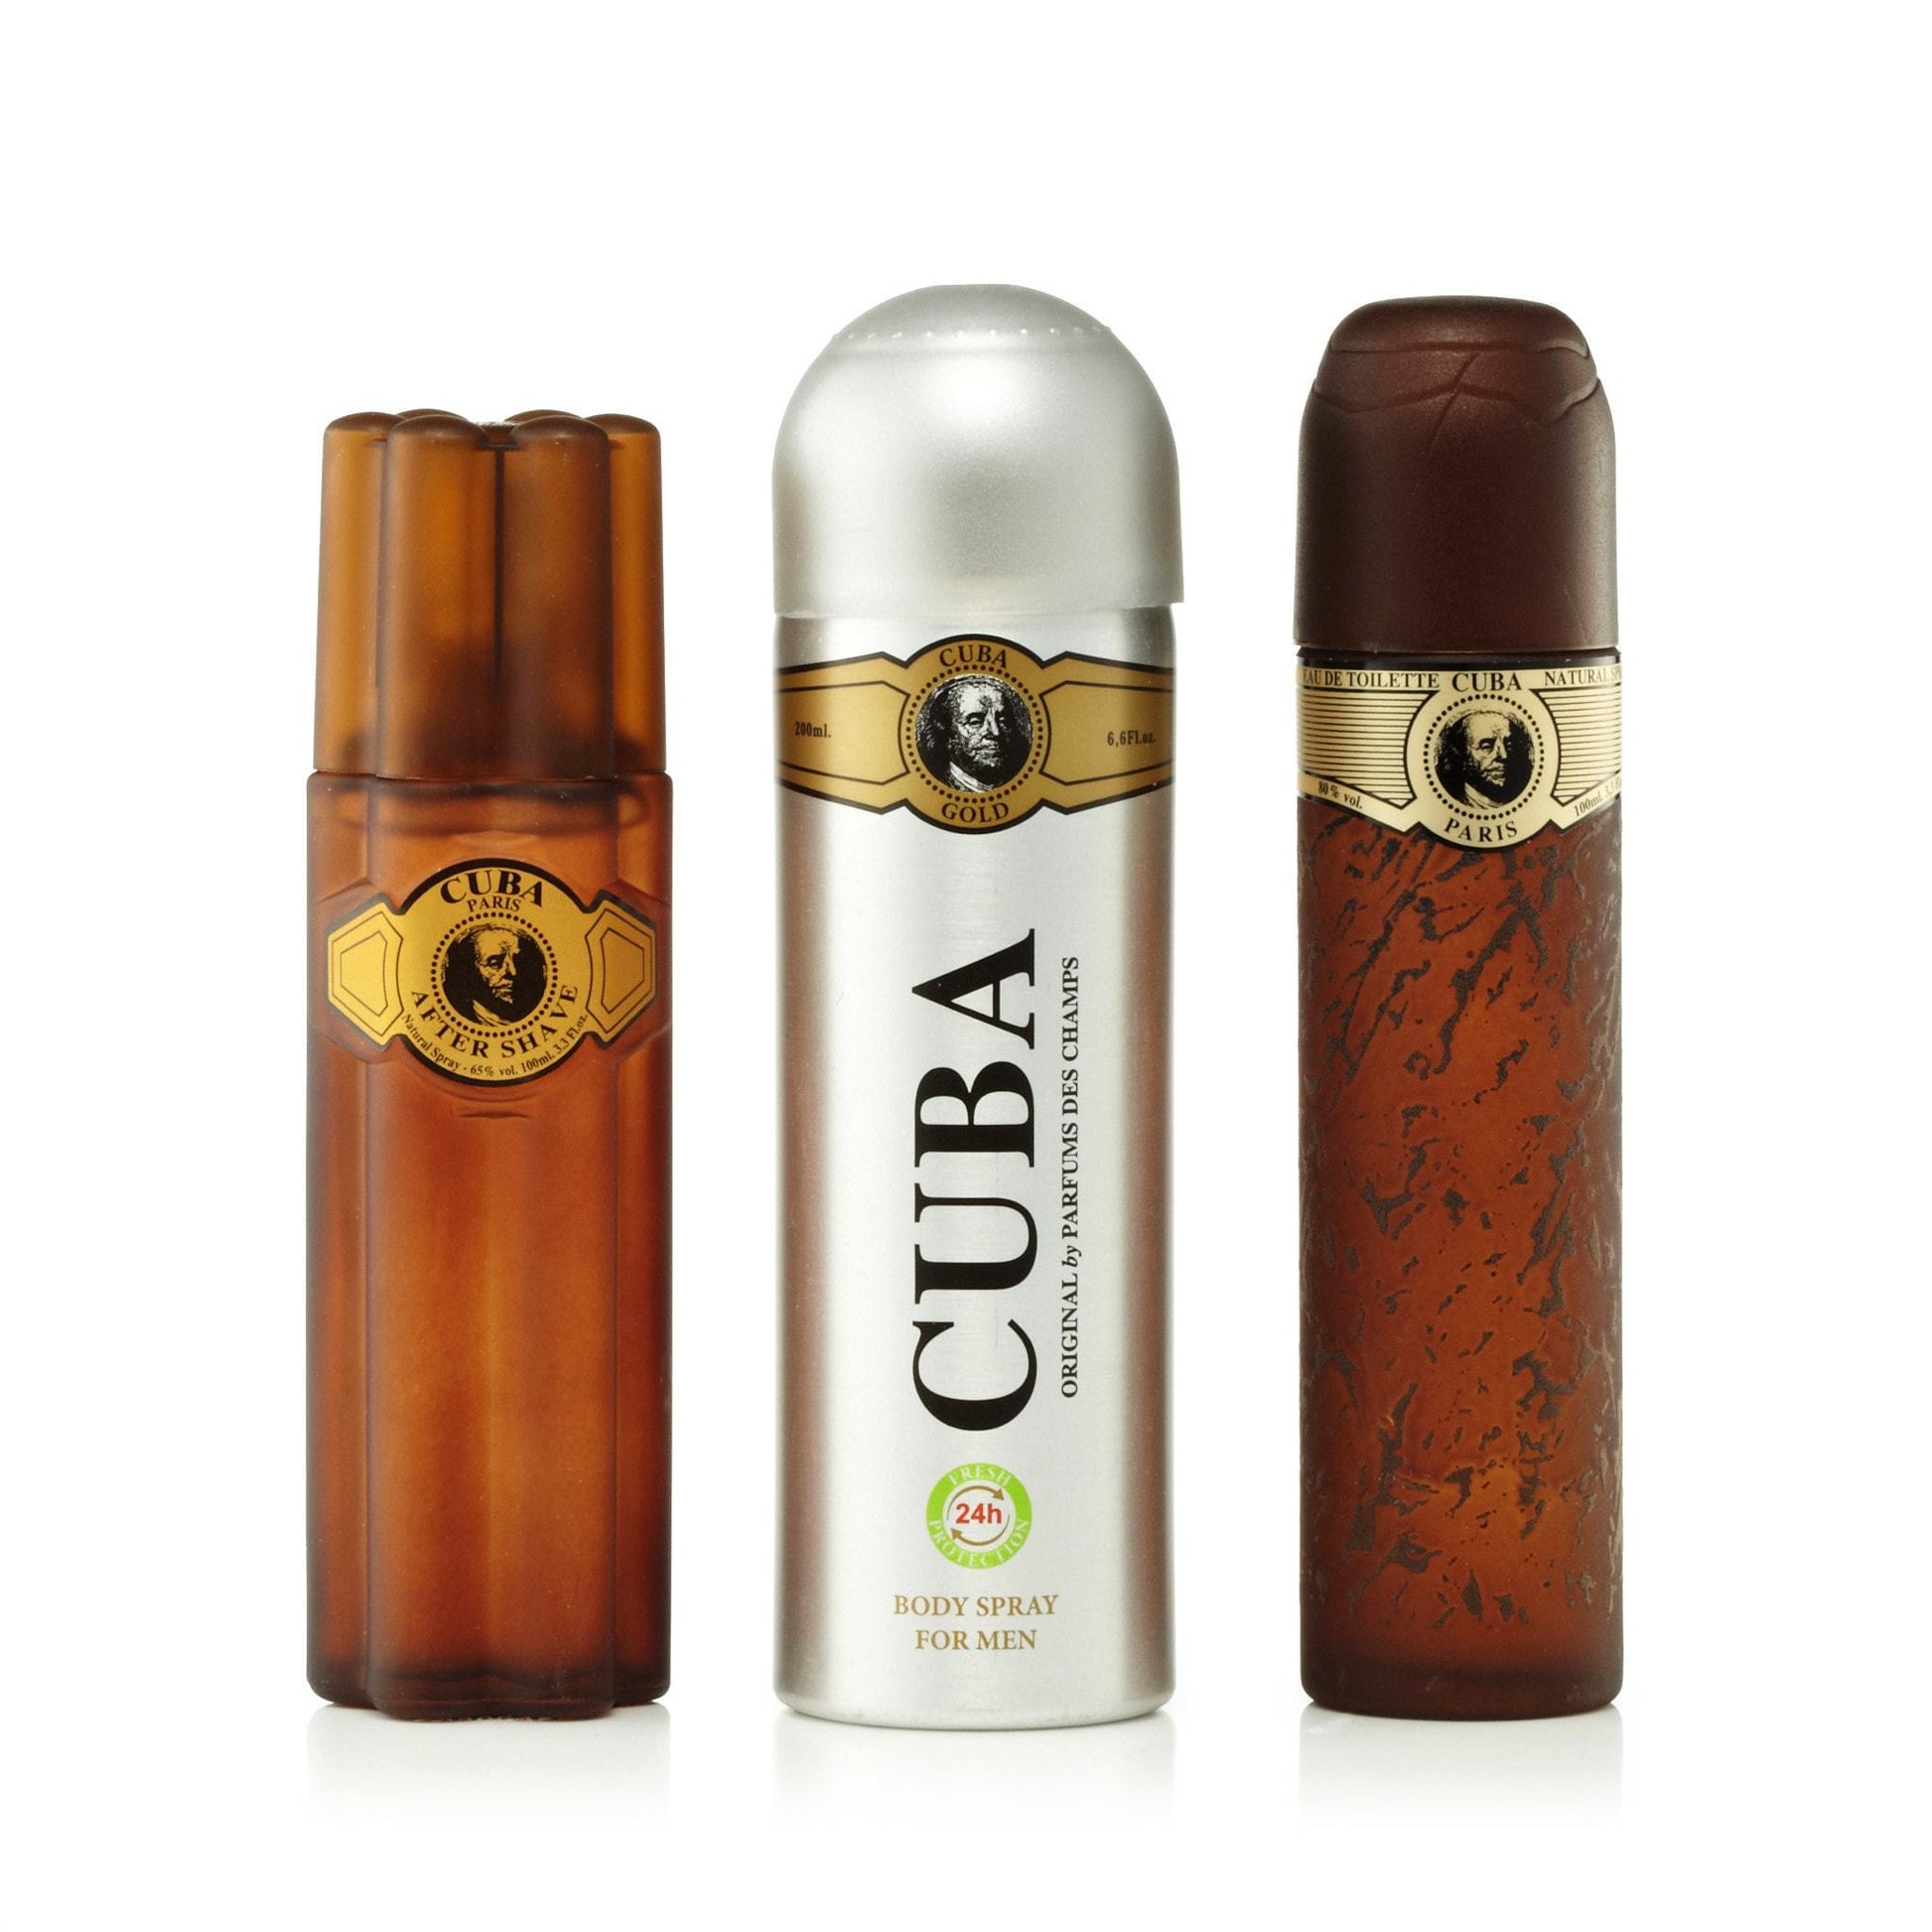 Cuba Black by Cuba Paris – Luxury Perfumes